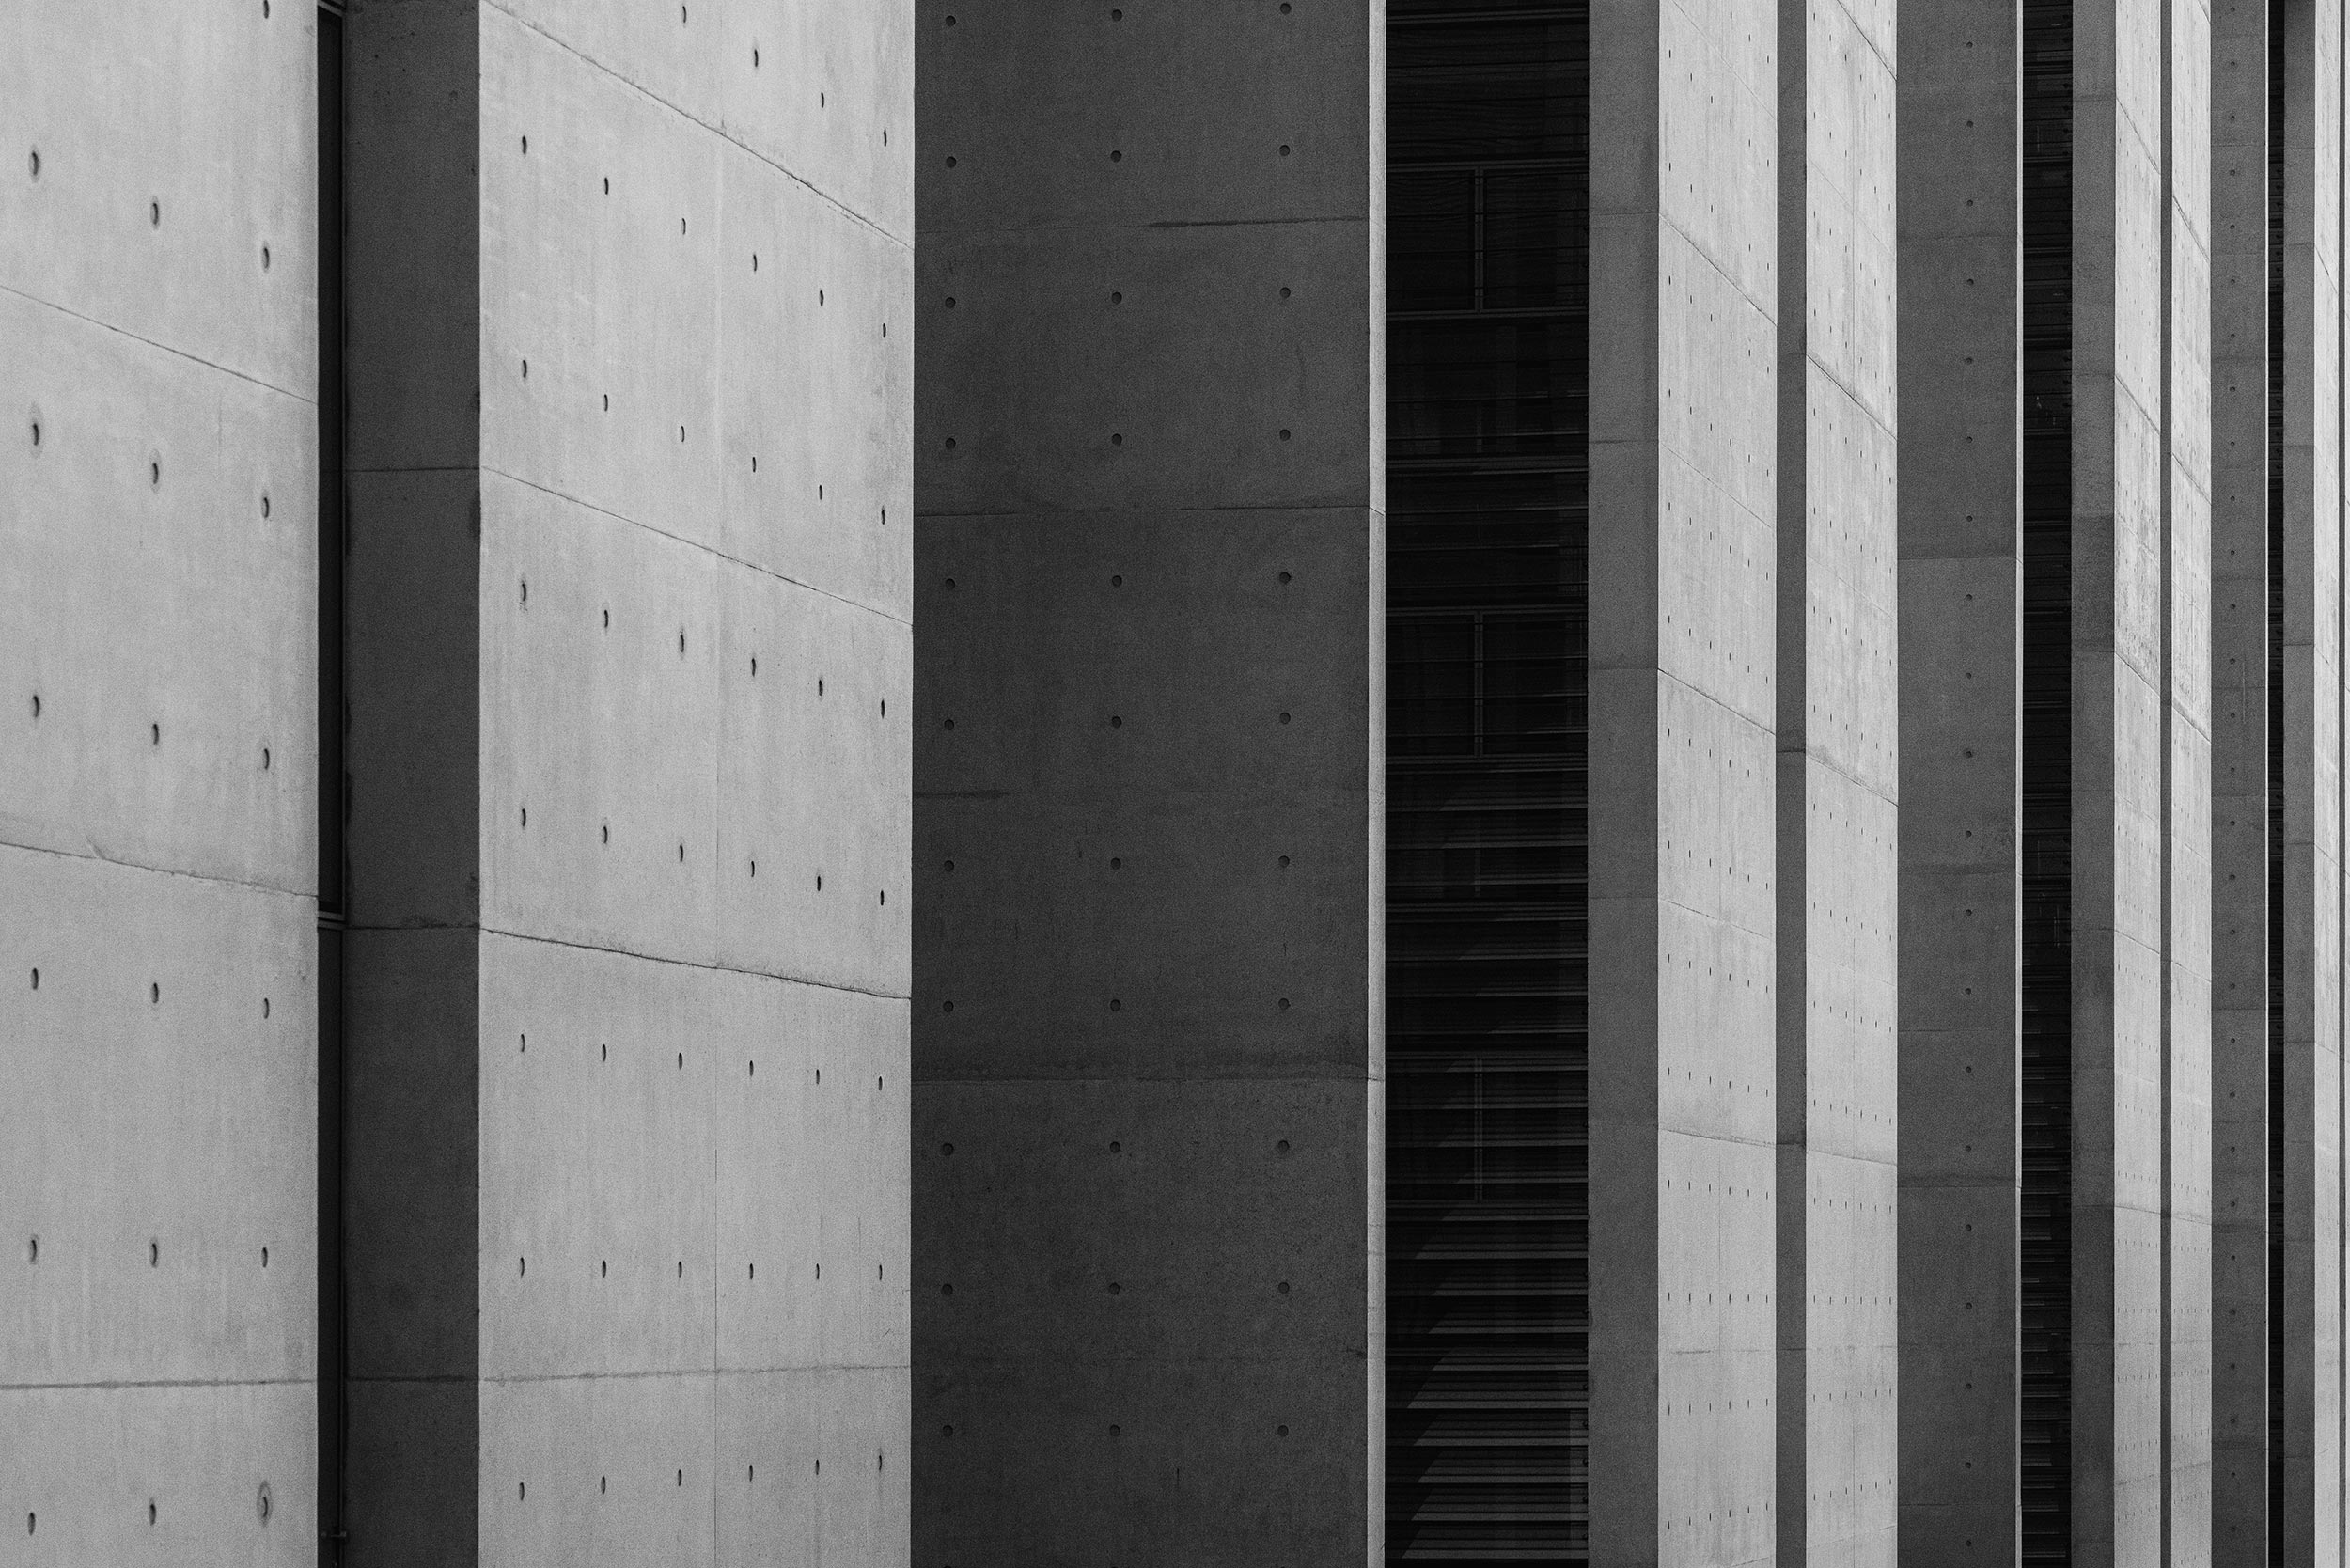 Paul-Loebe-Haus, Berlin - Stephan Braunfels - Black & White Fine Art Architecture Photography